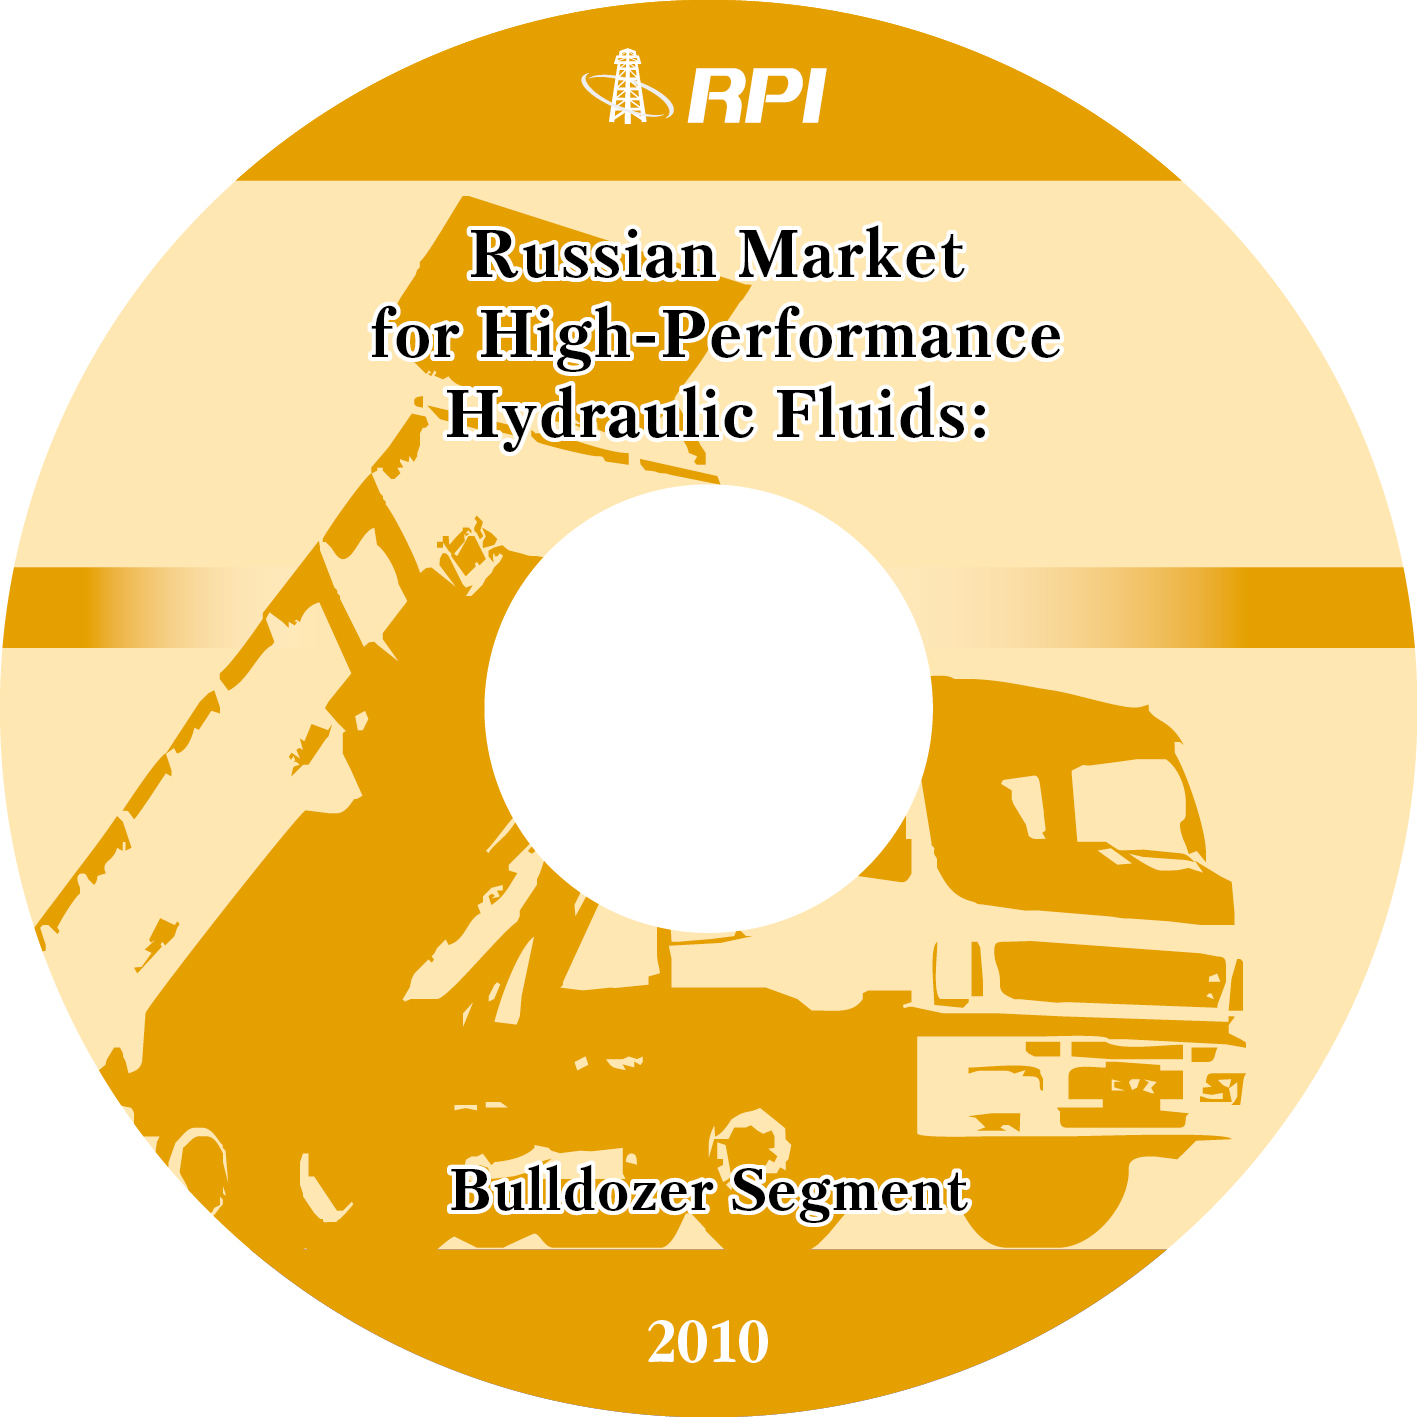 Russian Market for High-Performance Hydraulic Fluids: Bulldozers